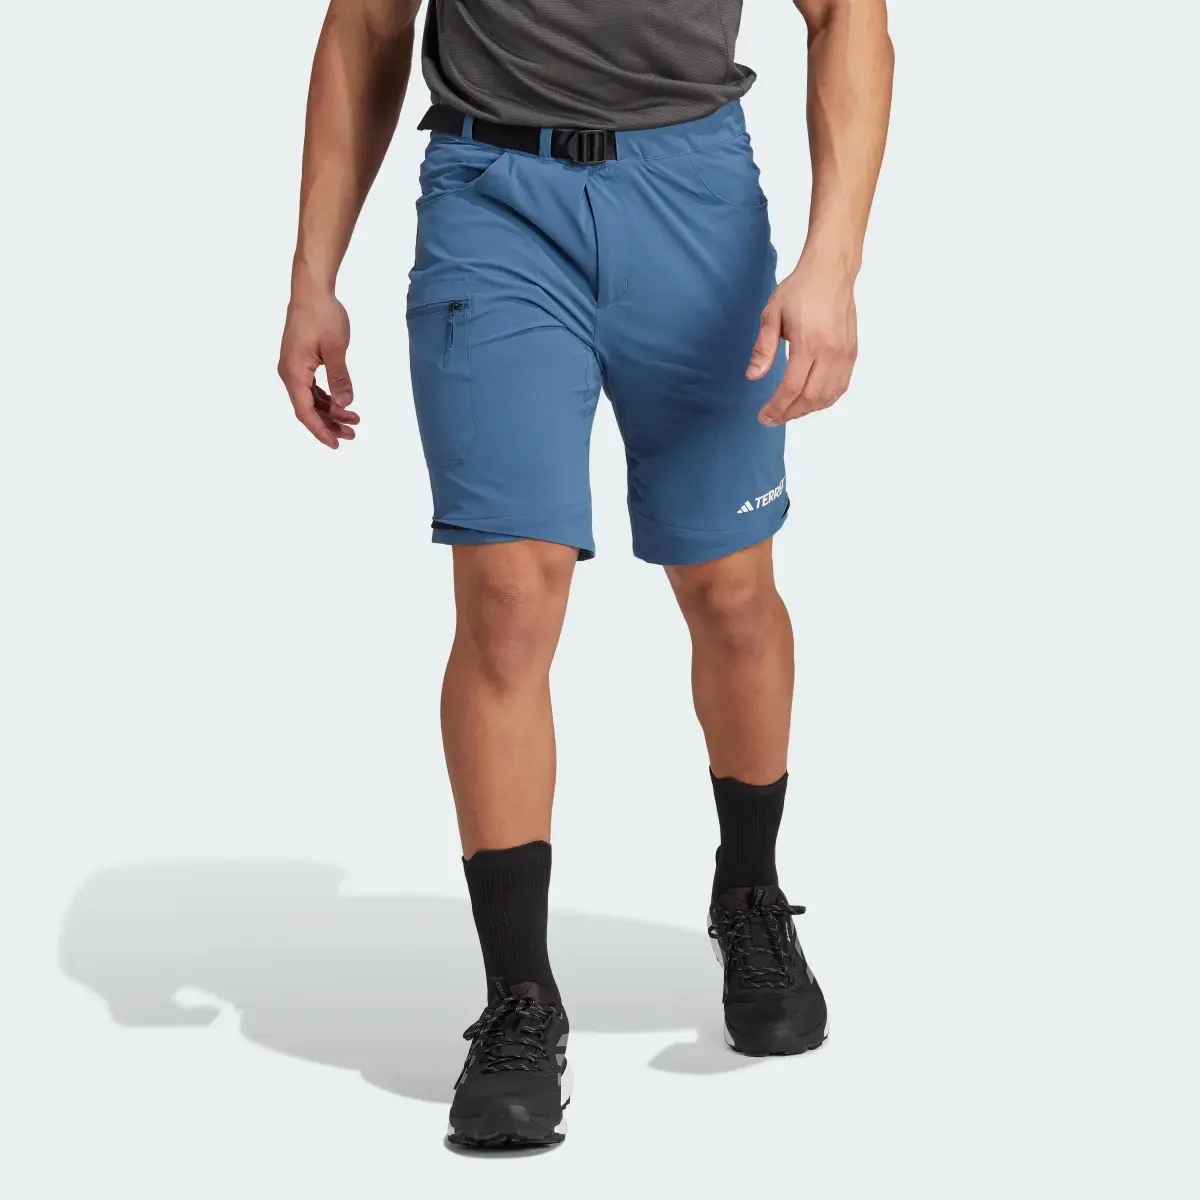 Adidas Terrex Utilitas Hiking Zip-Off Pants. 2